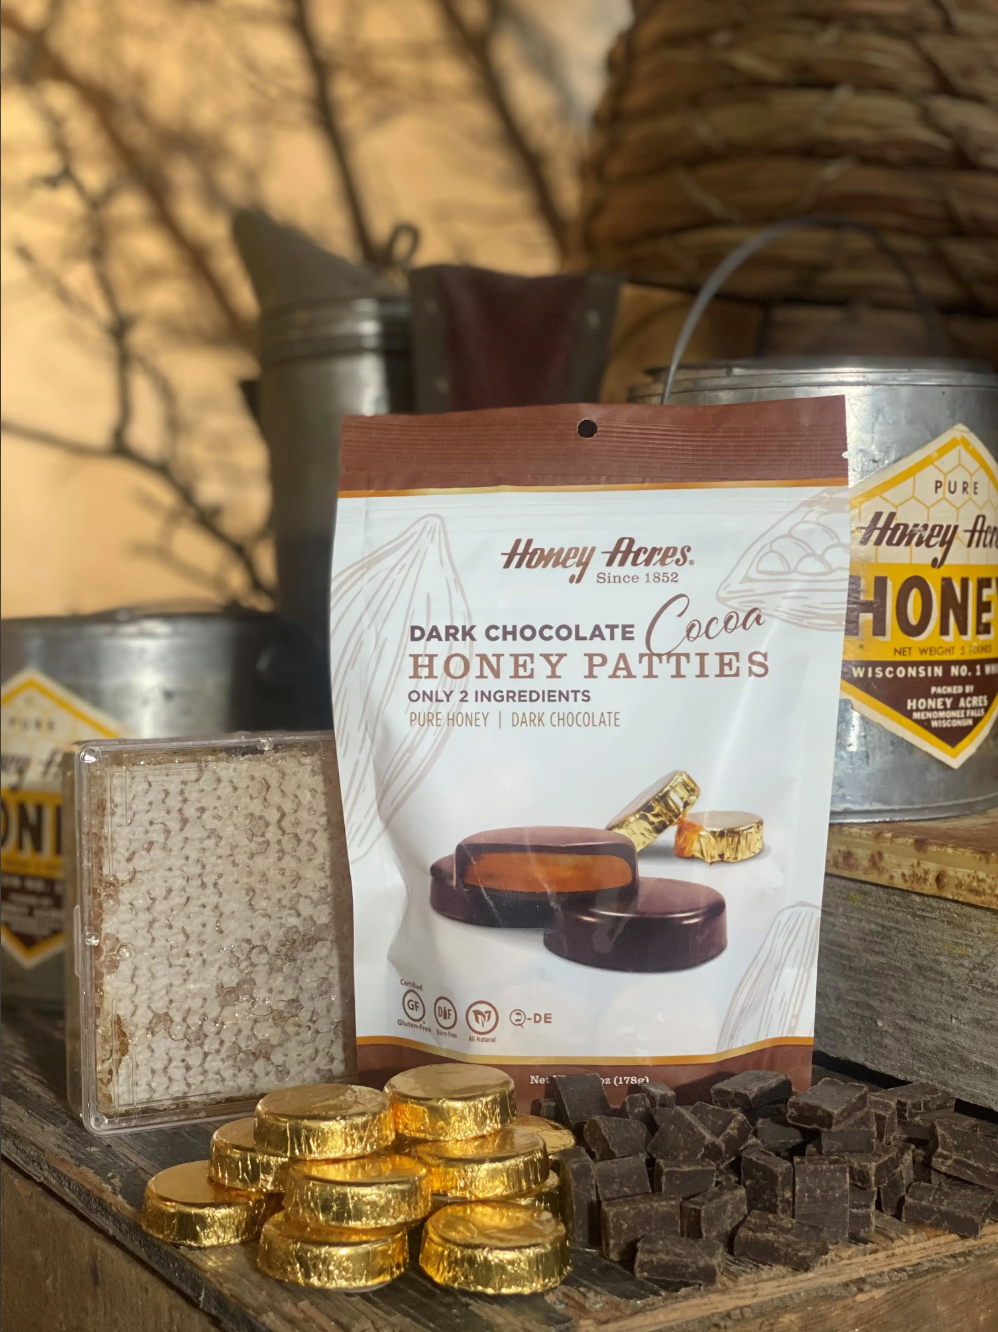 Cocoa Chocolate Honey Patties | Honey Acres - Farmhouse Teas